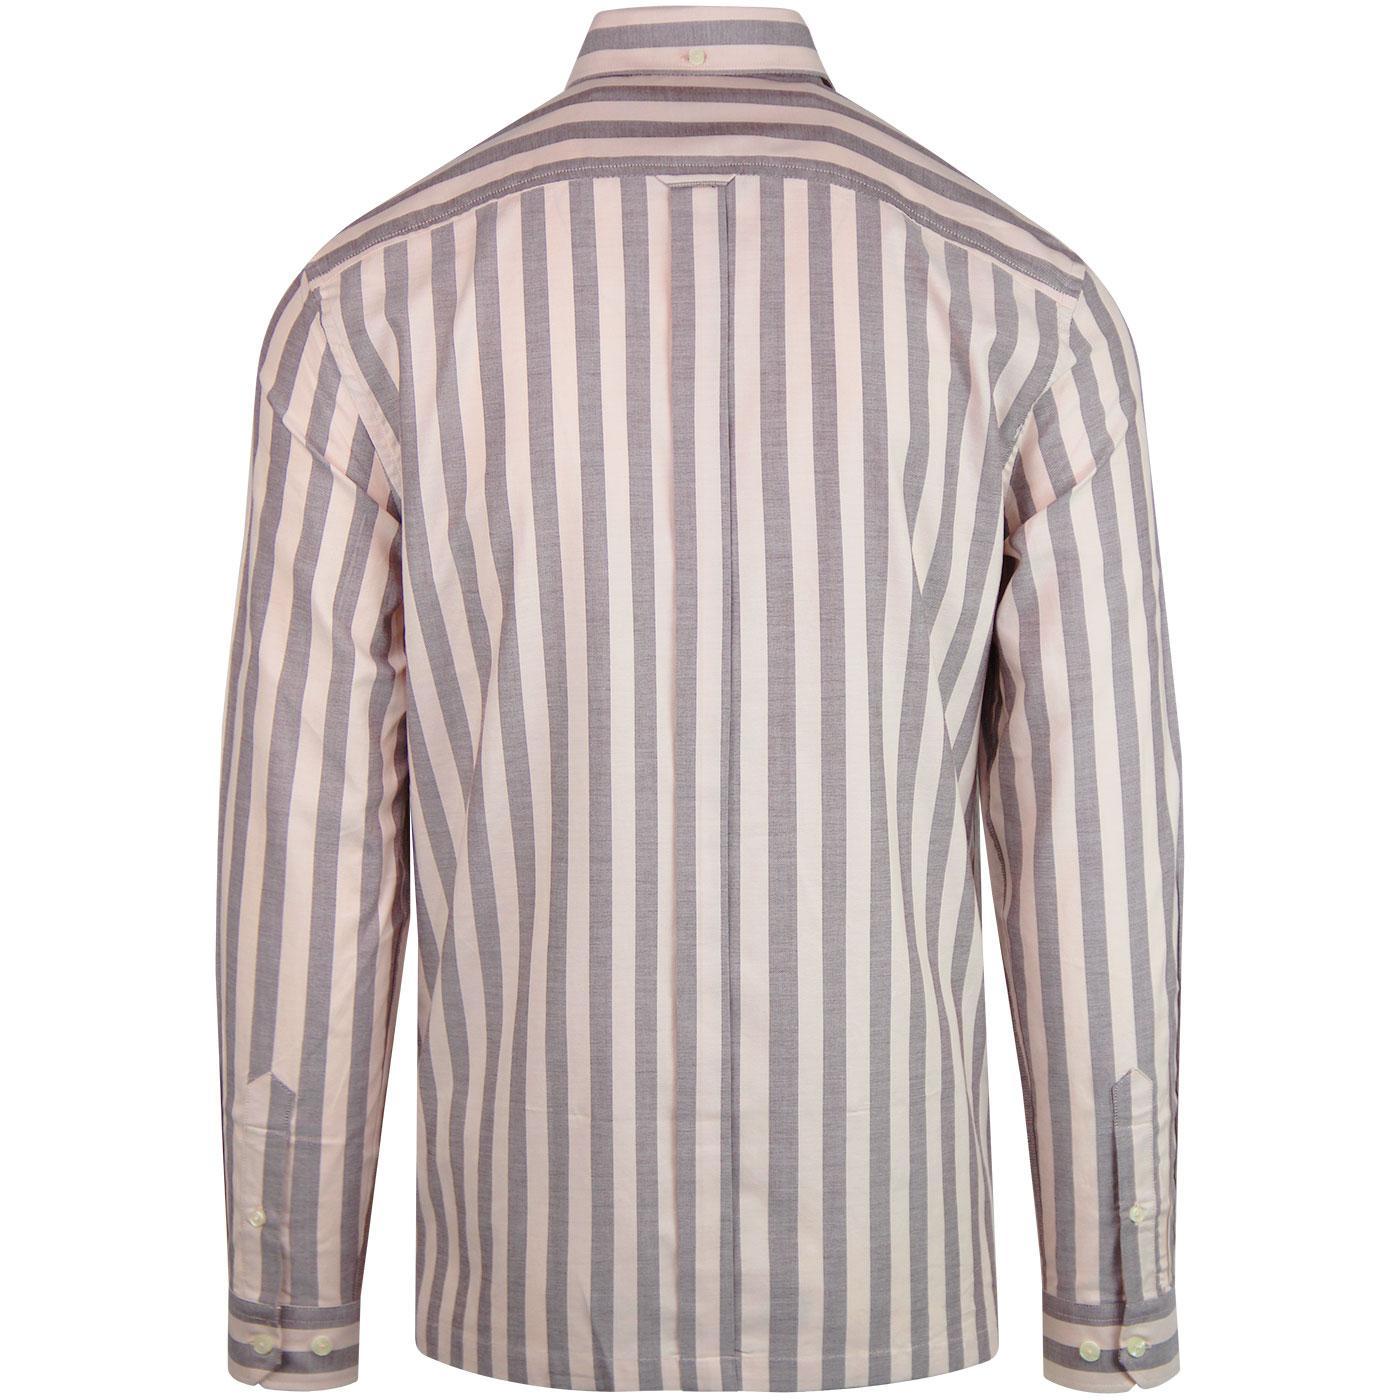 BEN SHERMAN Ivy Oxford Stripe 1960s Mod Shirt (Light Pink)